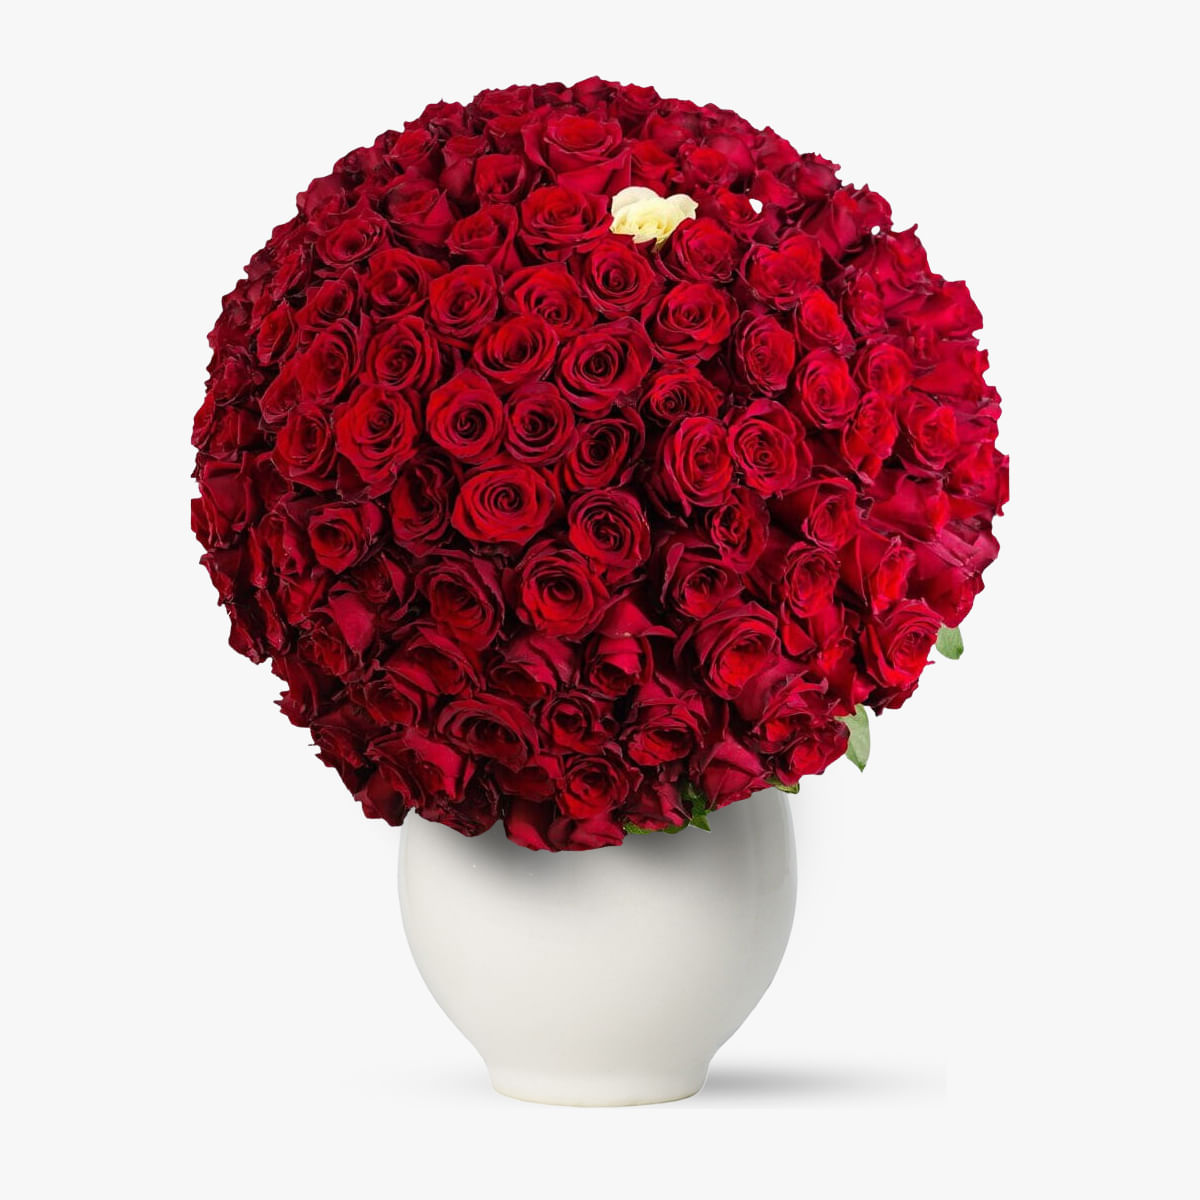 Buchet 229 trandafiri rosii - Dragoste fara limite - Standard